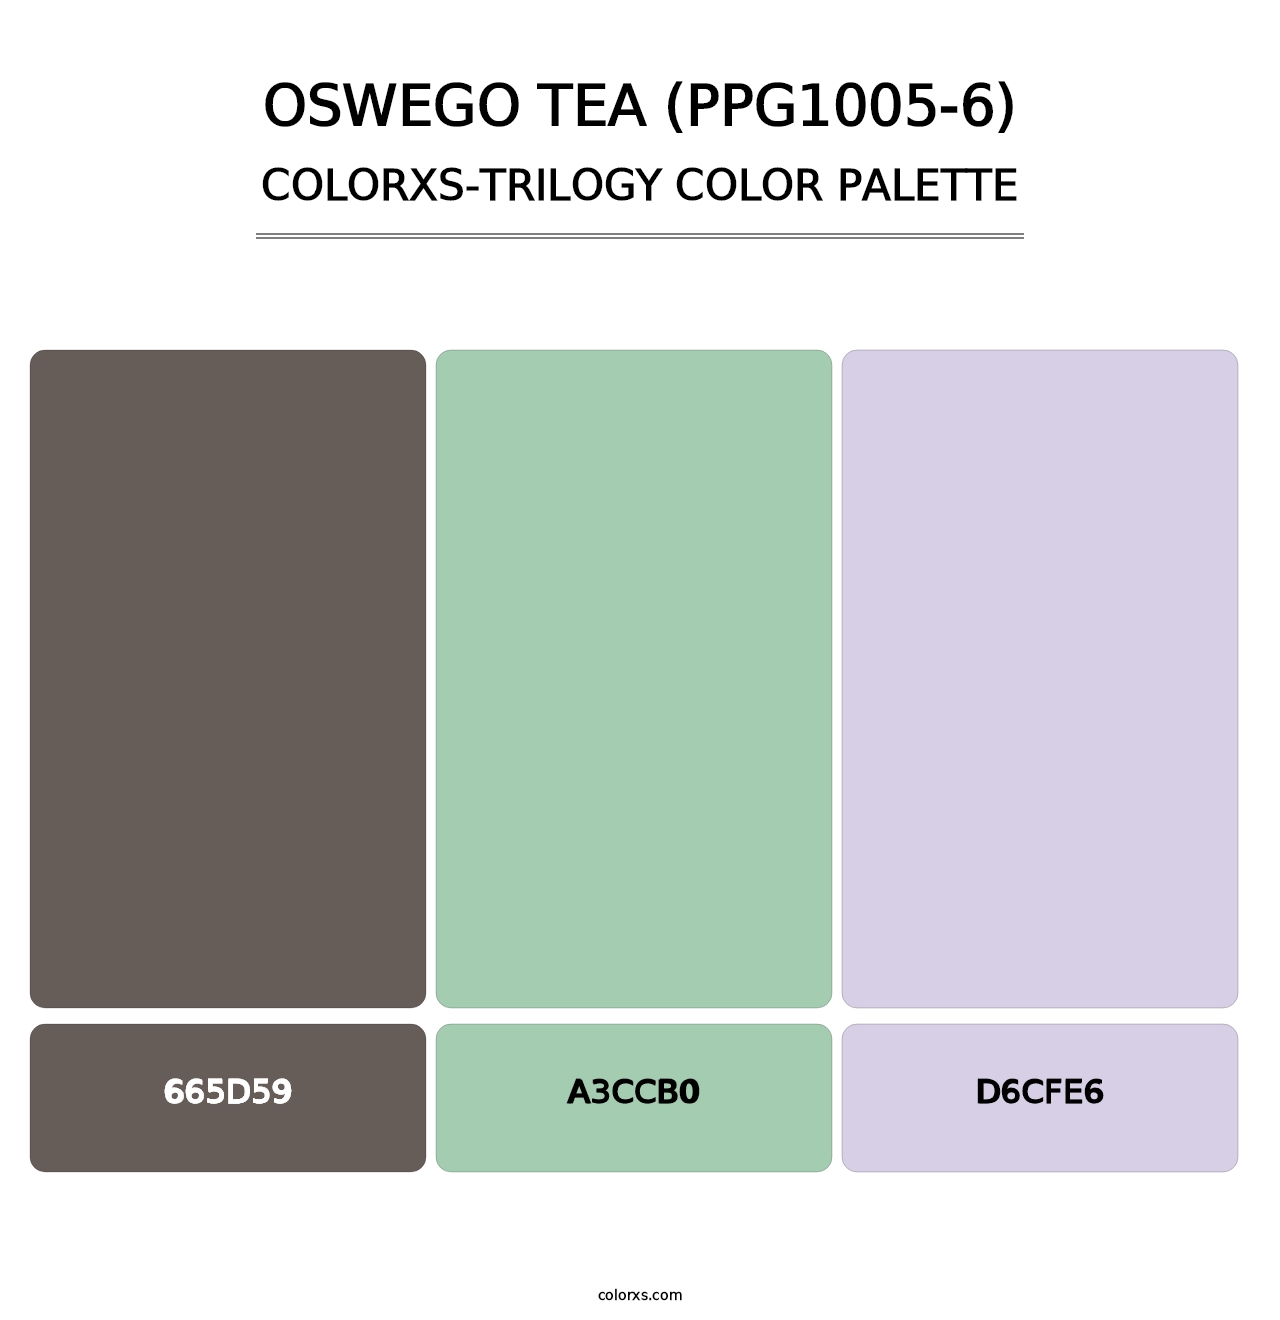 Oswego Tea (PPG1005-6) - Colorxs Trilogy Palette